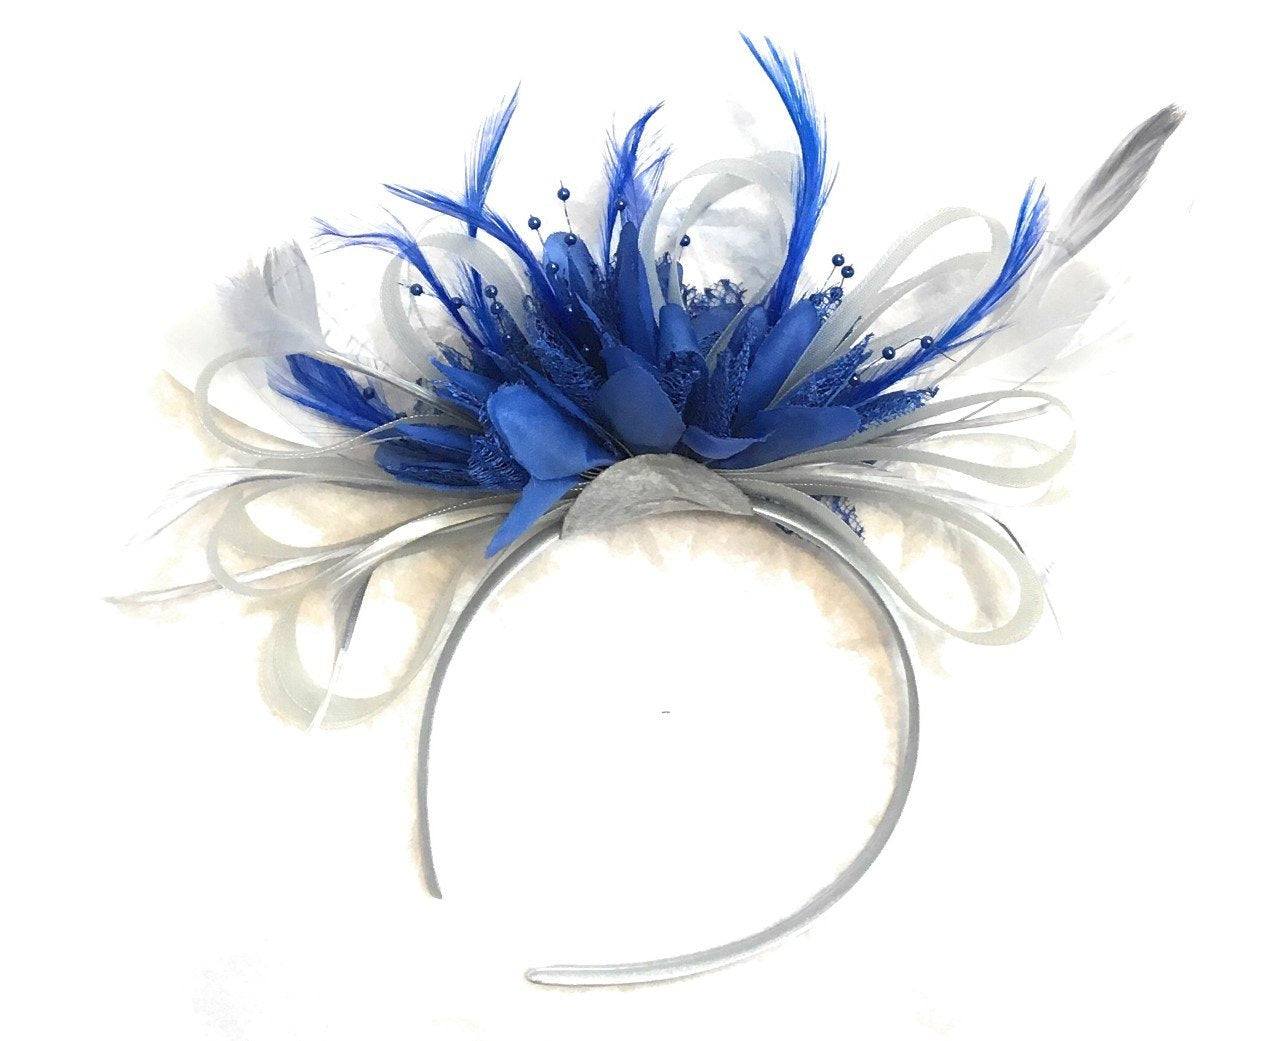 Caprilite Grey Silver & Royal Blue Fascinator on Headband AliceBand UK Wedding Ascot Races Loop